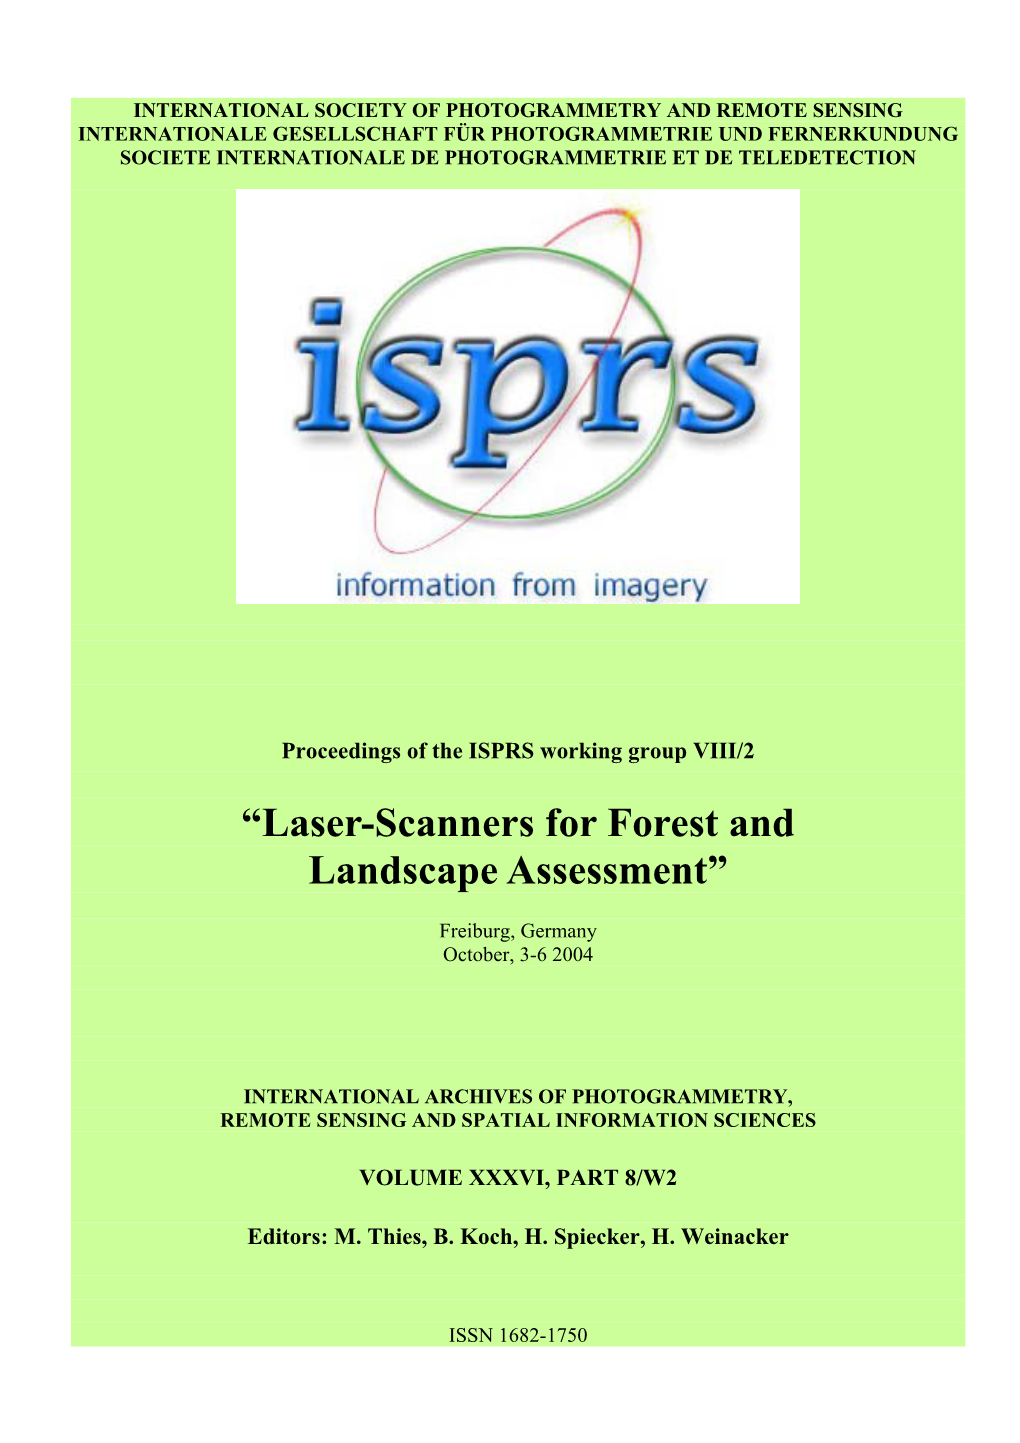 “Laser-Scanners for Forest and Landscape Assessment”